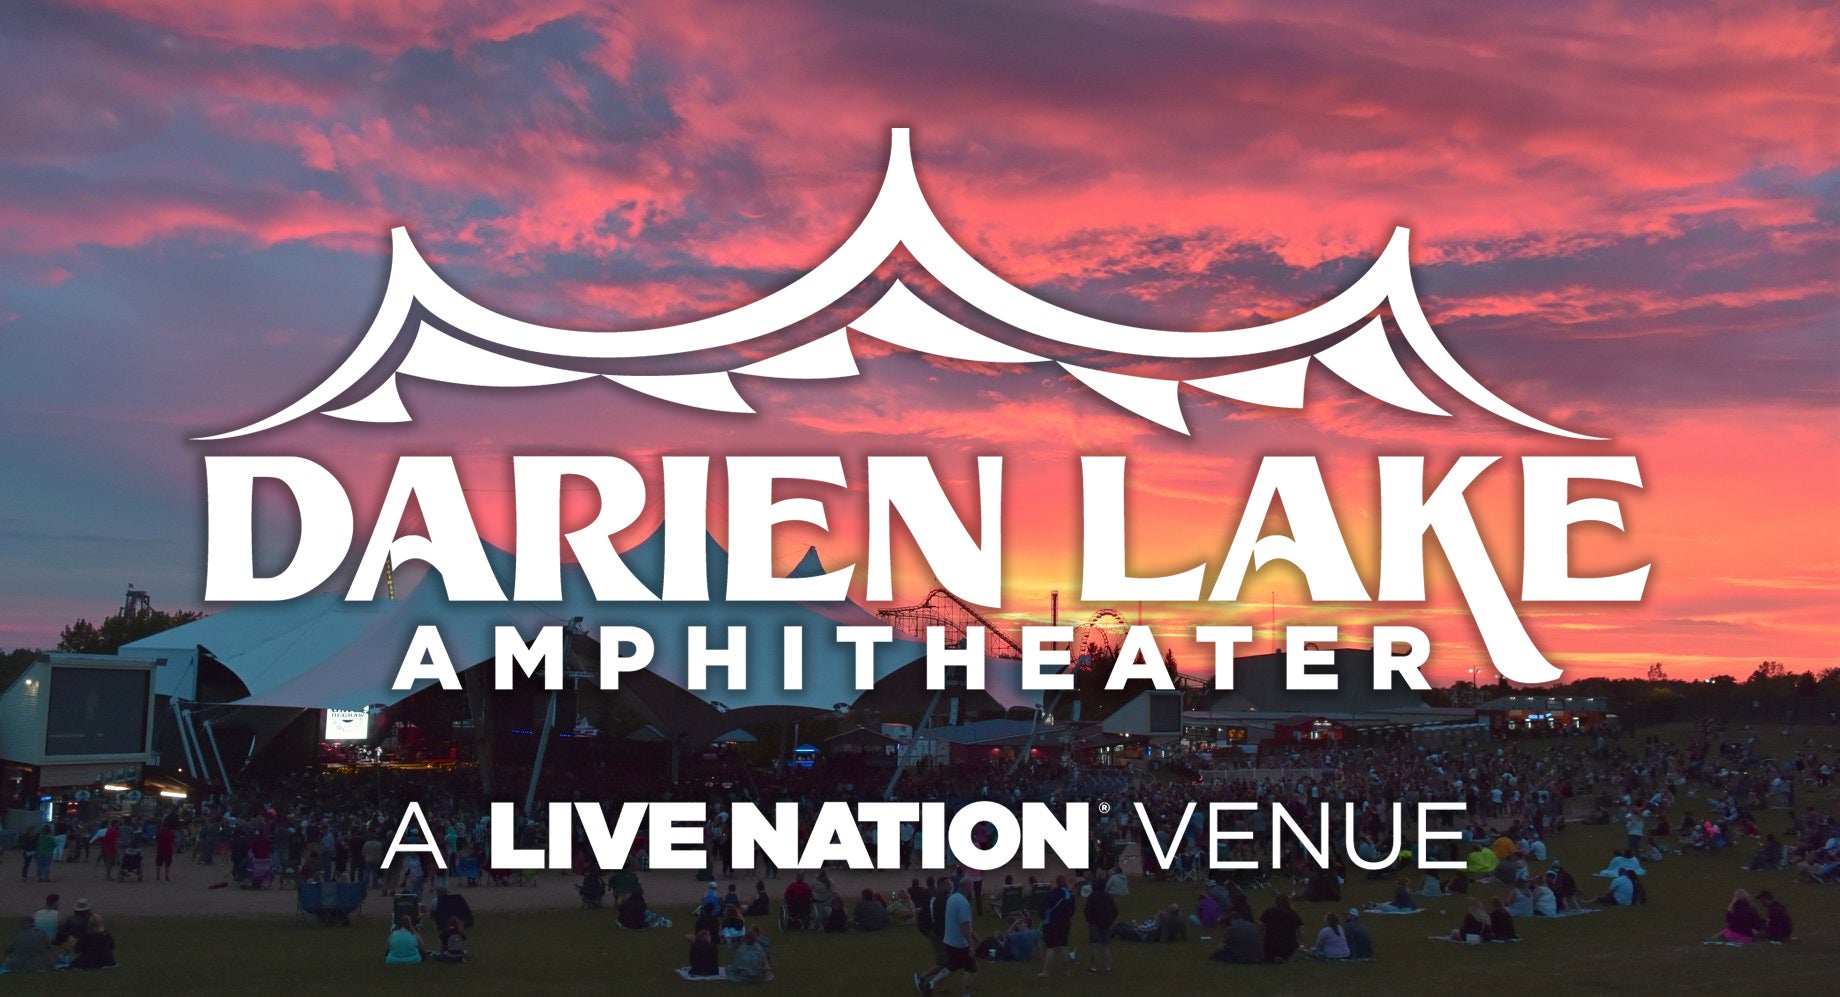 Darien Lake Amphitheater 2020 show schedule & venue information